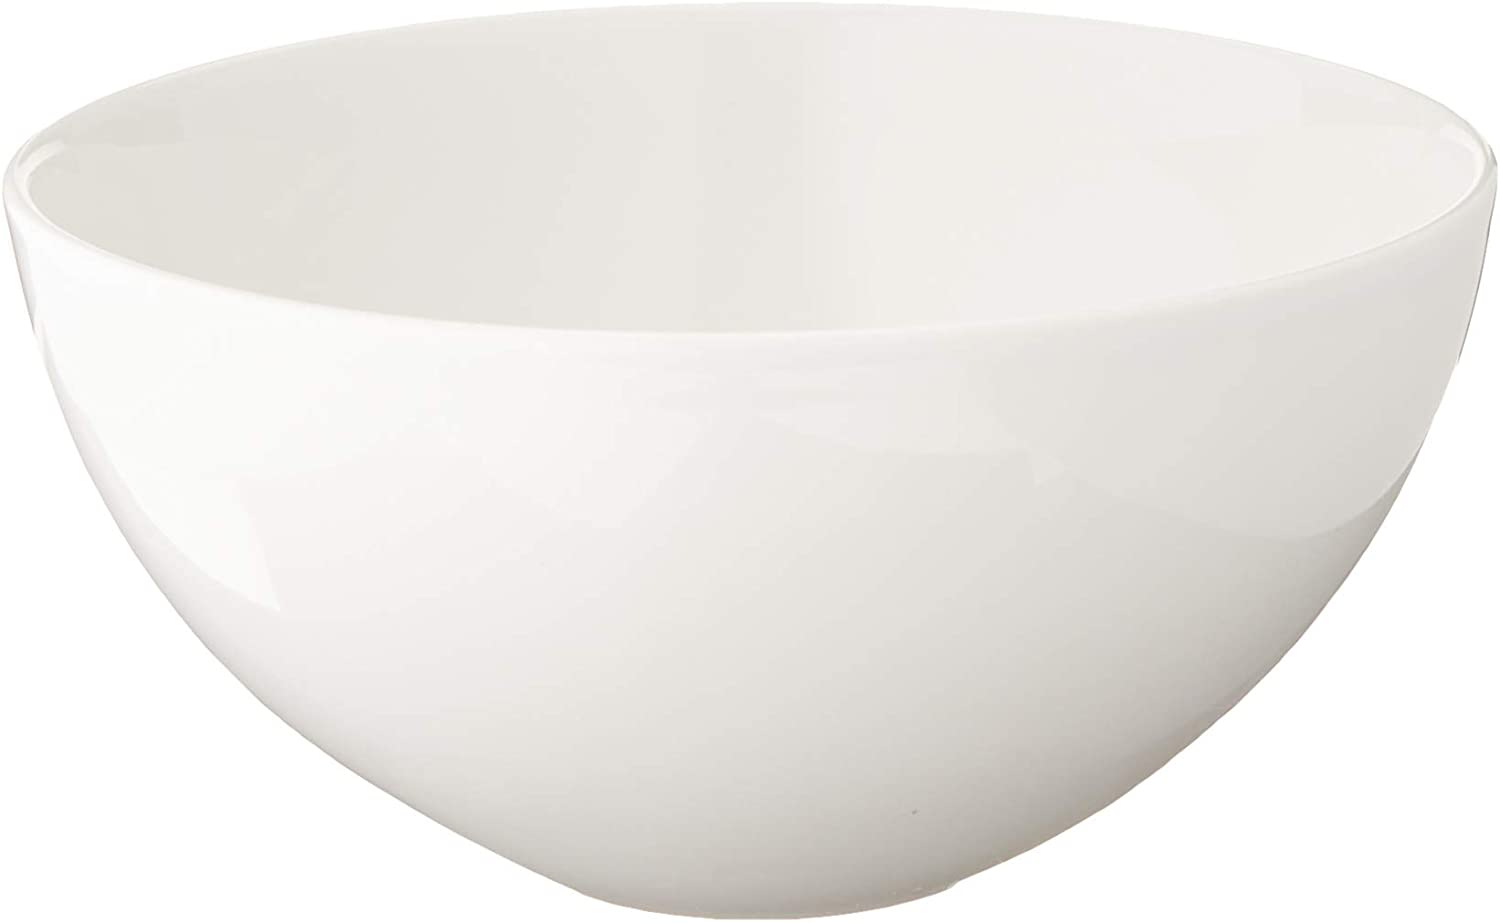 ASA 4772147 Bowl, White, 20 x 20 x 10 cm